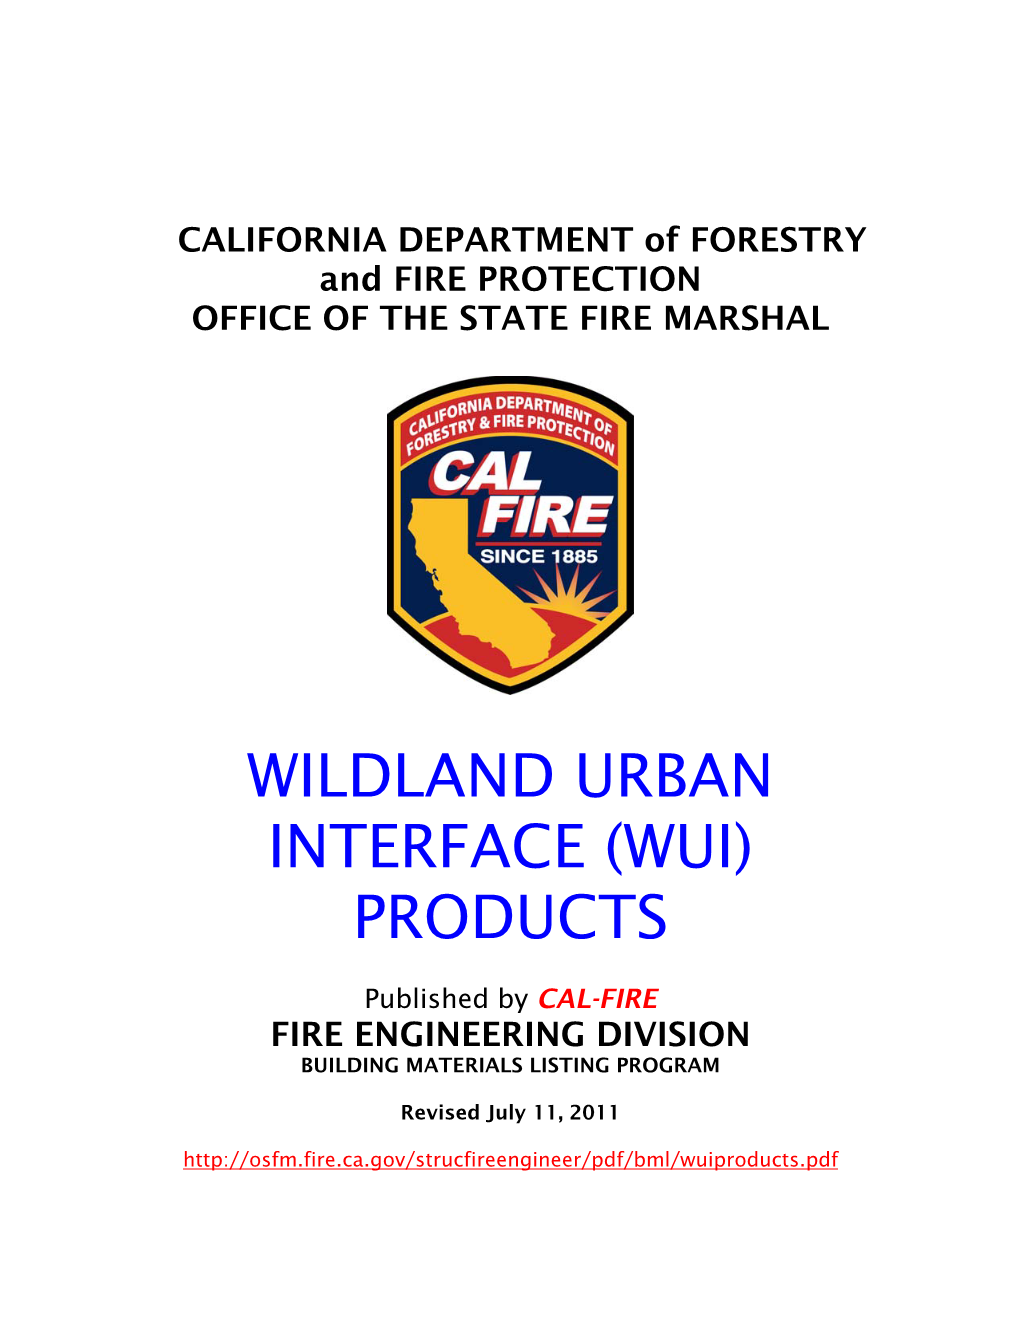 Wildland Urban Interface (Wui) Products